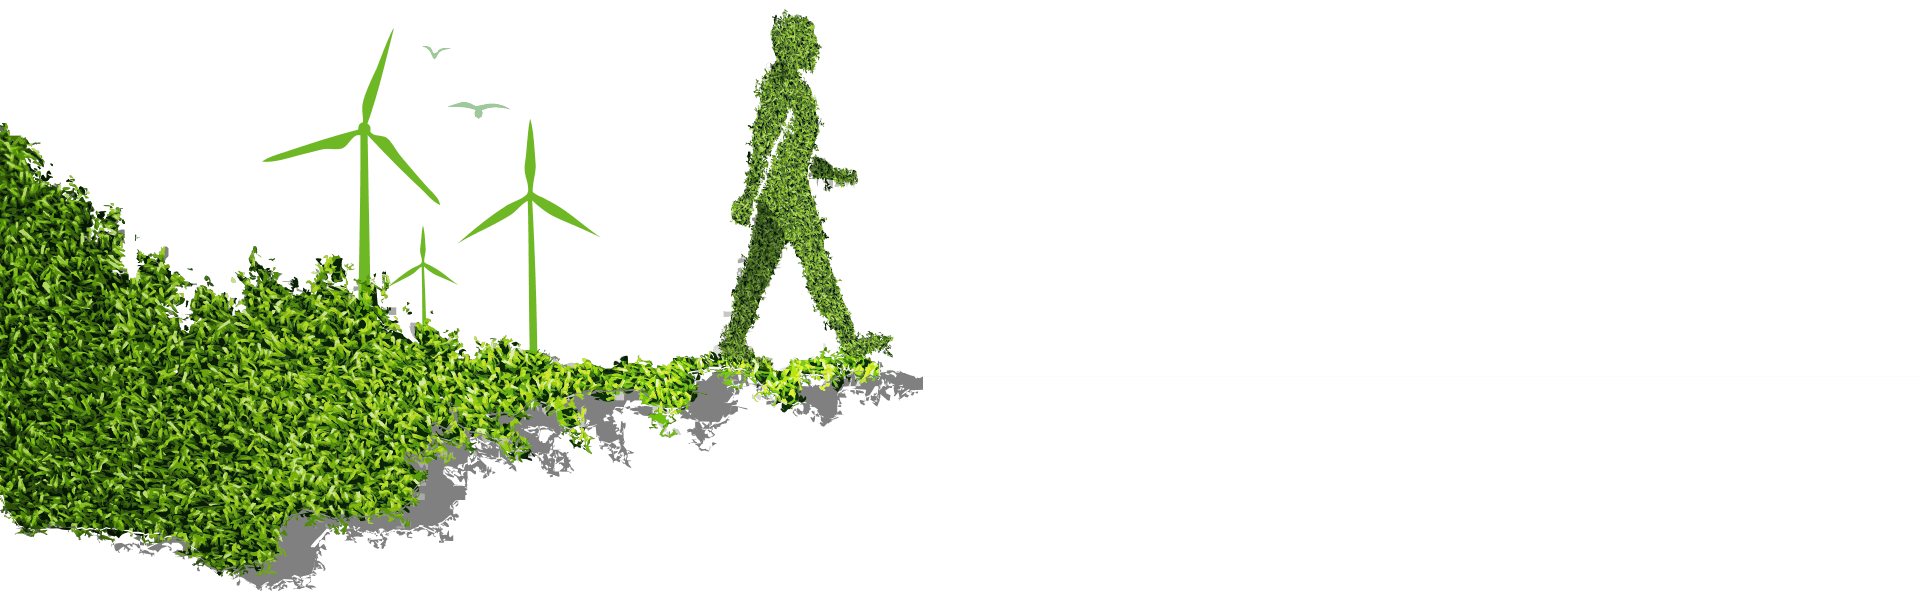 Green man walking over green energy fields